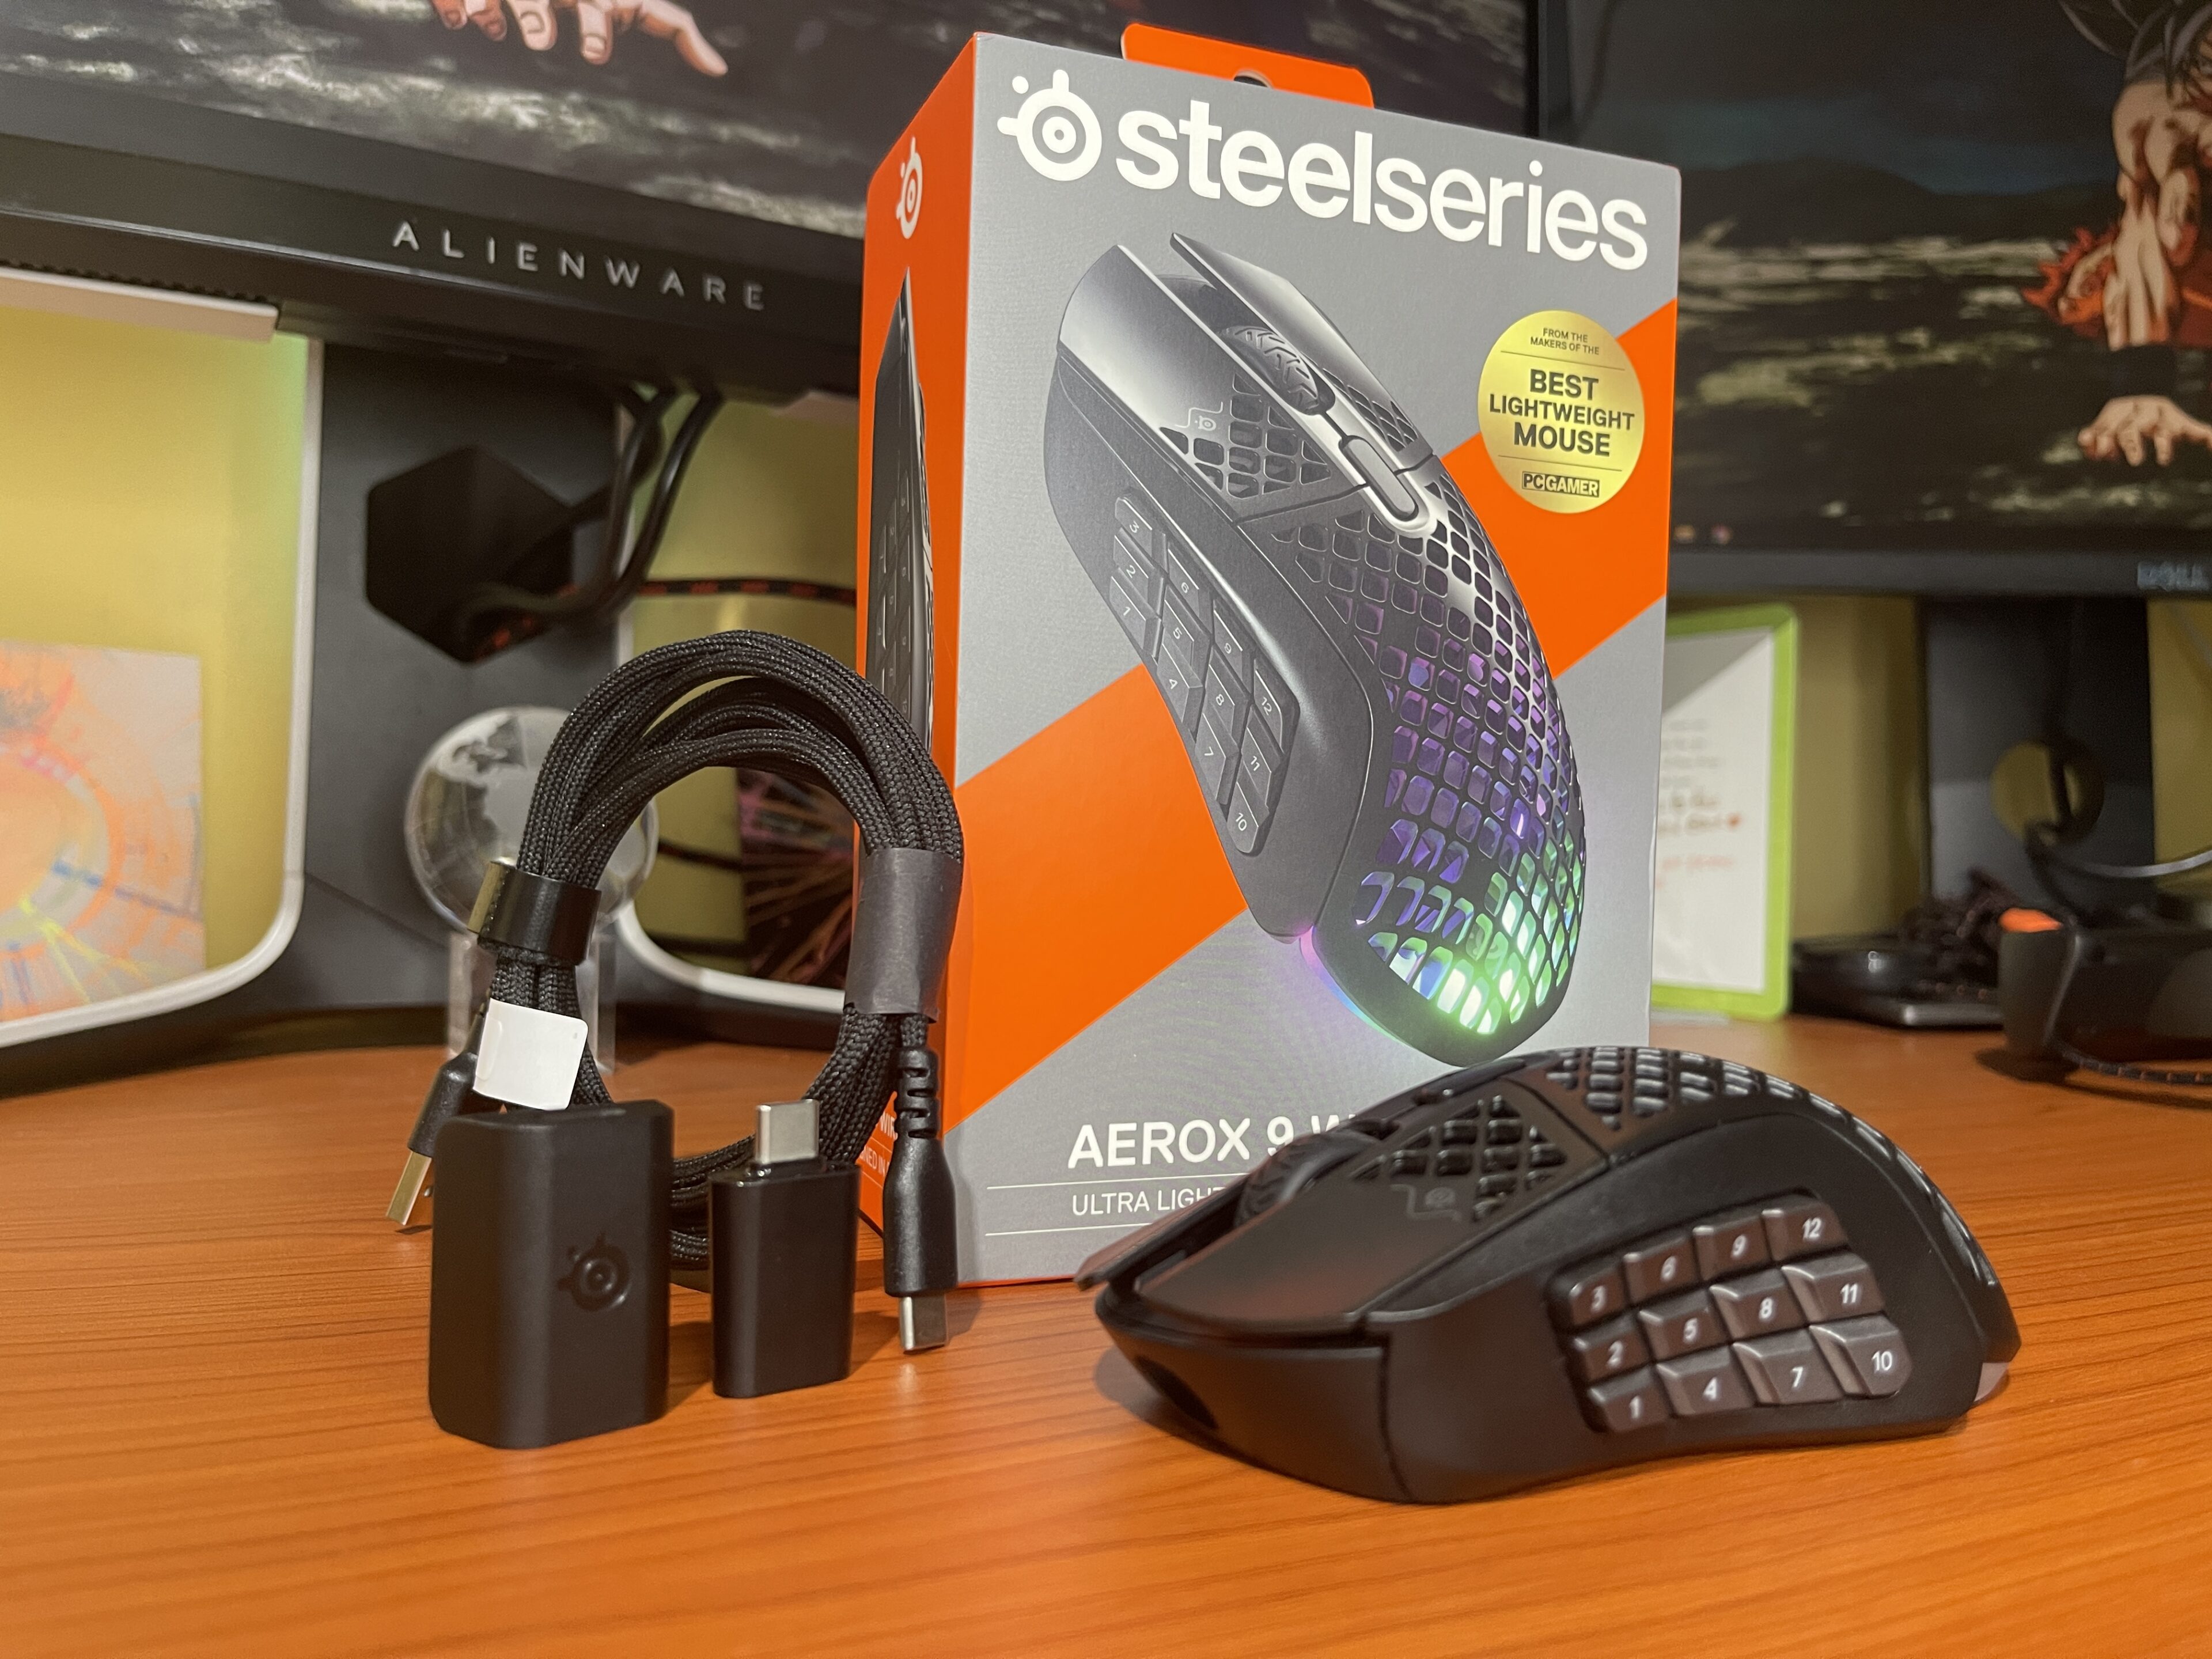 Steelseries Aerox 9 Wireless , GamersRD